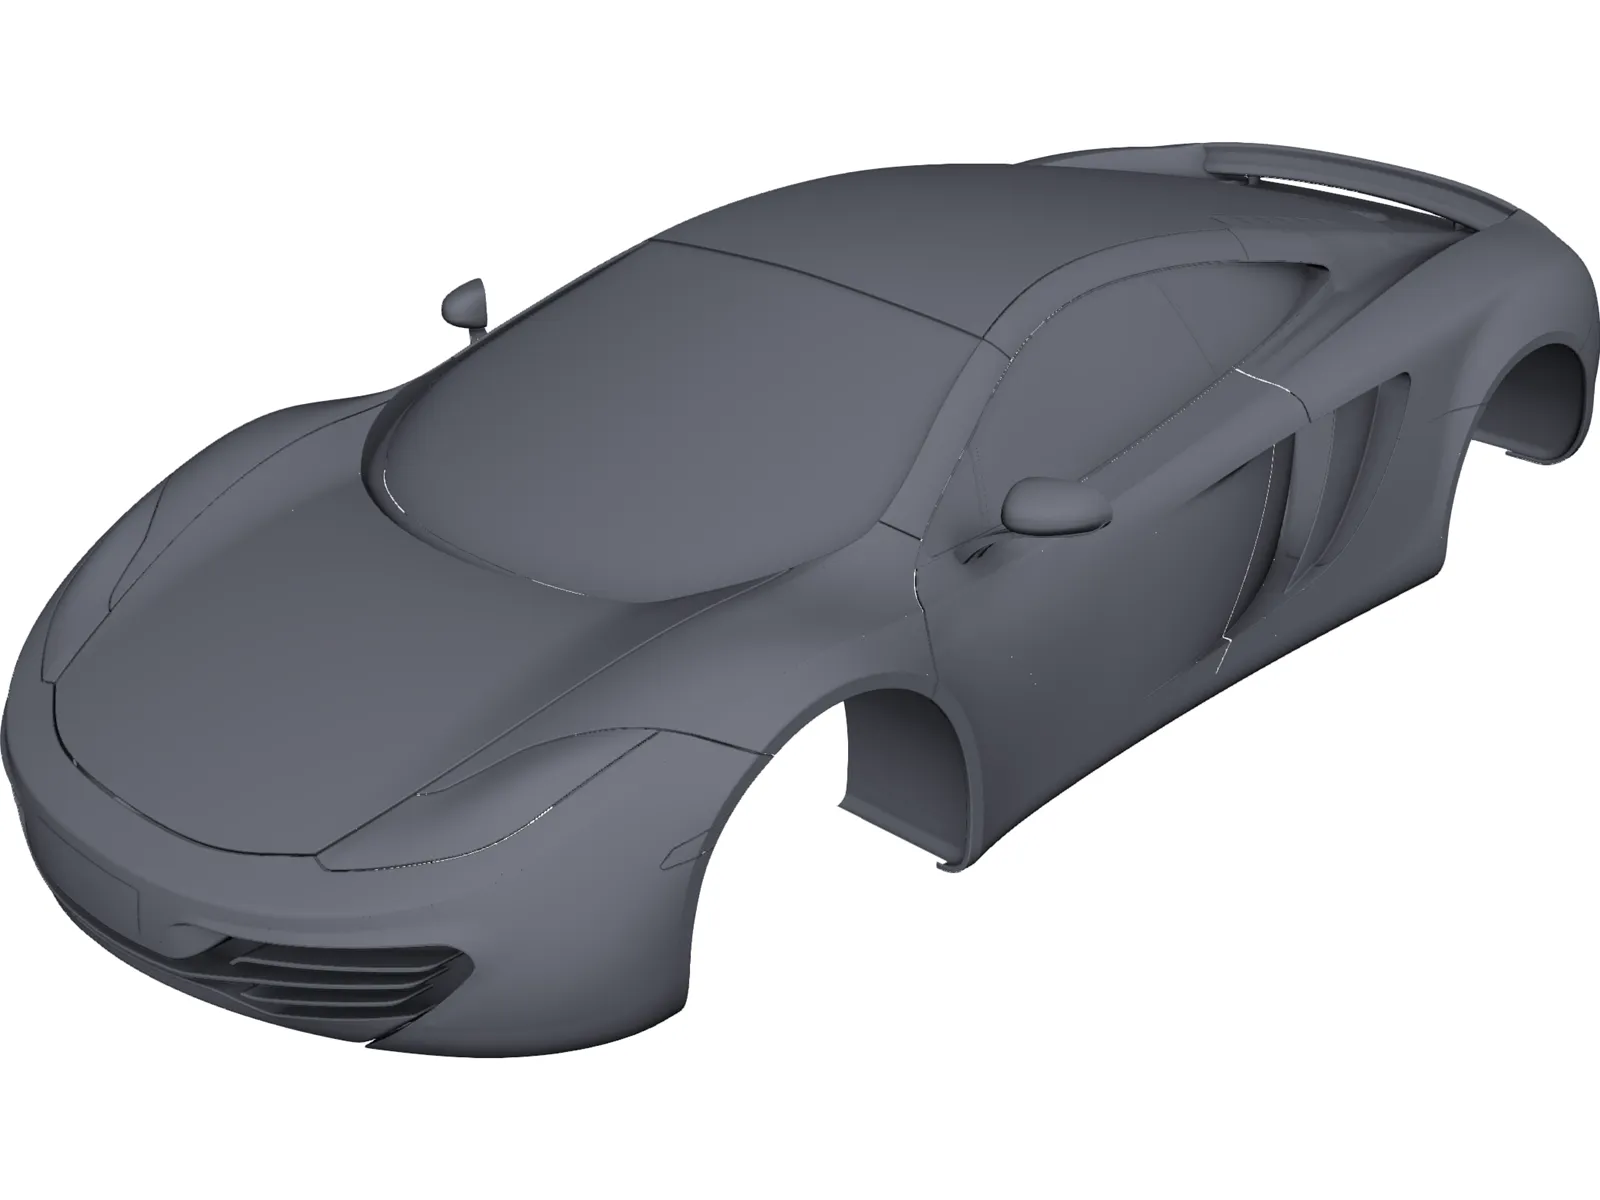 McLaren MP4-12C Body 3D Model